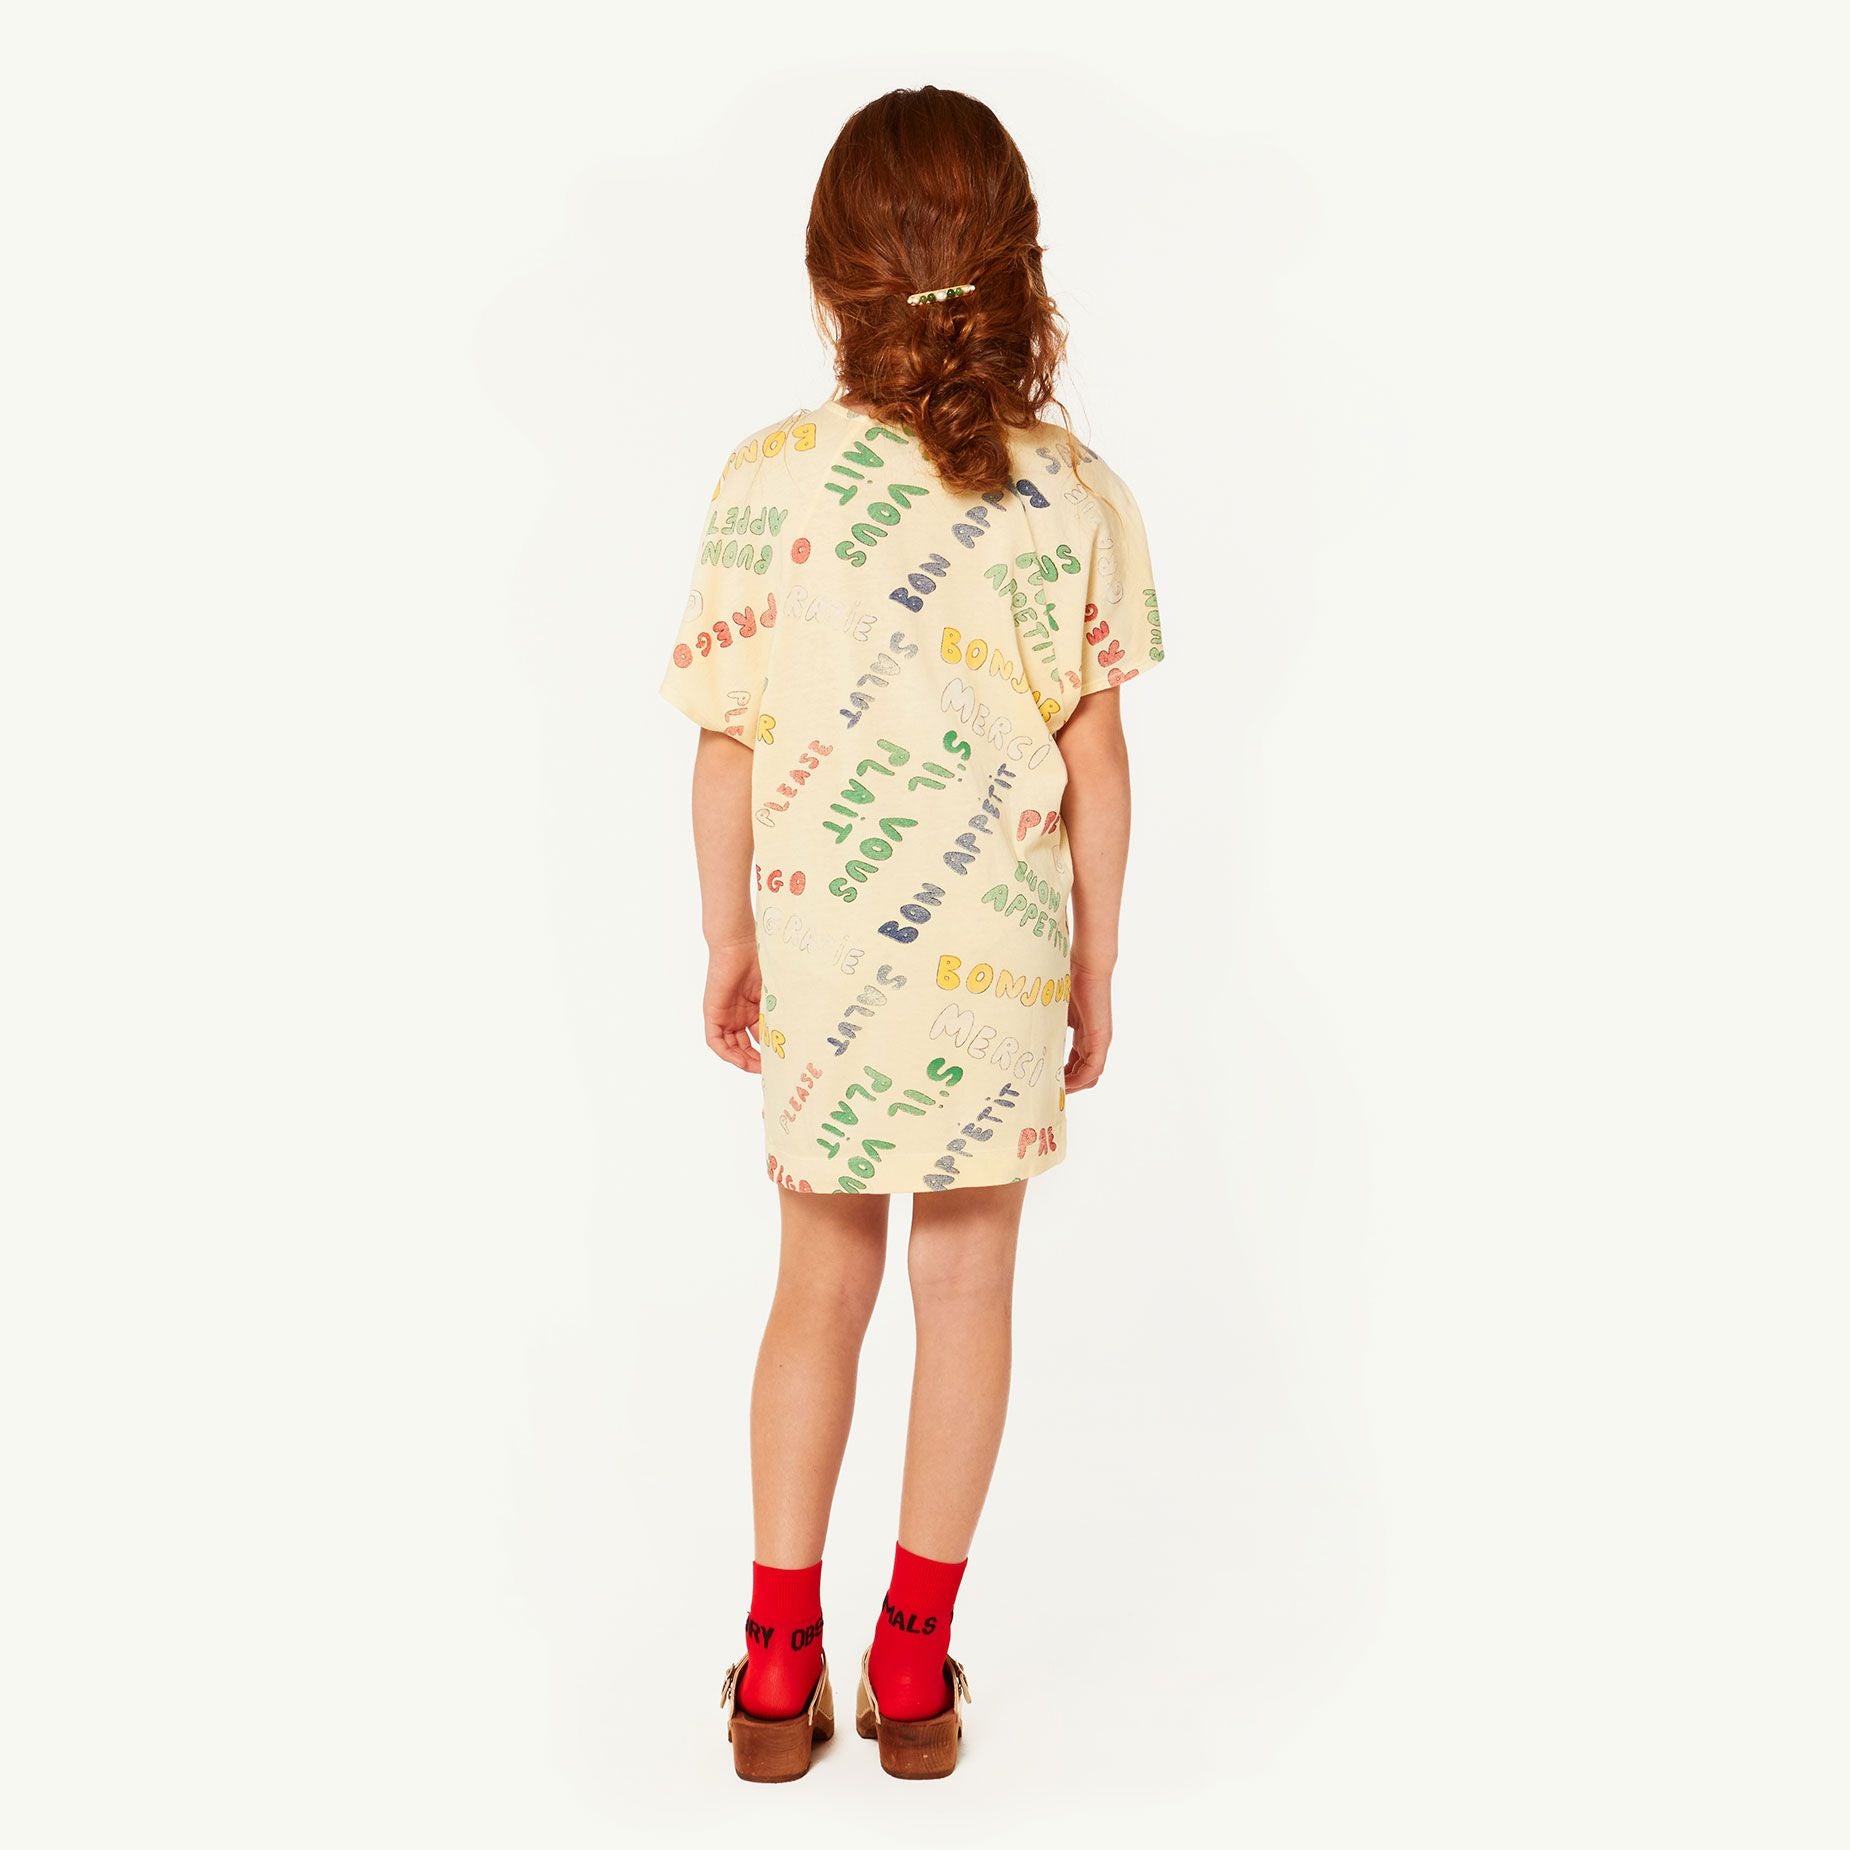 DRAGON KIDS DRESS, YELLOW WORDS - Cemarose Children's Fashion Boutique